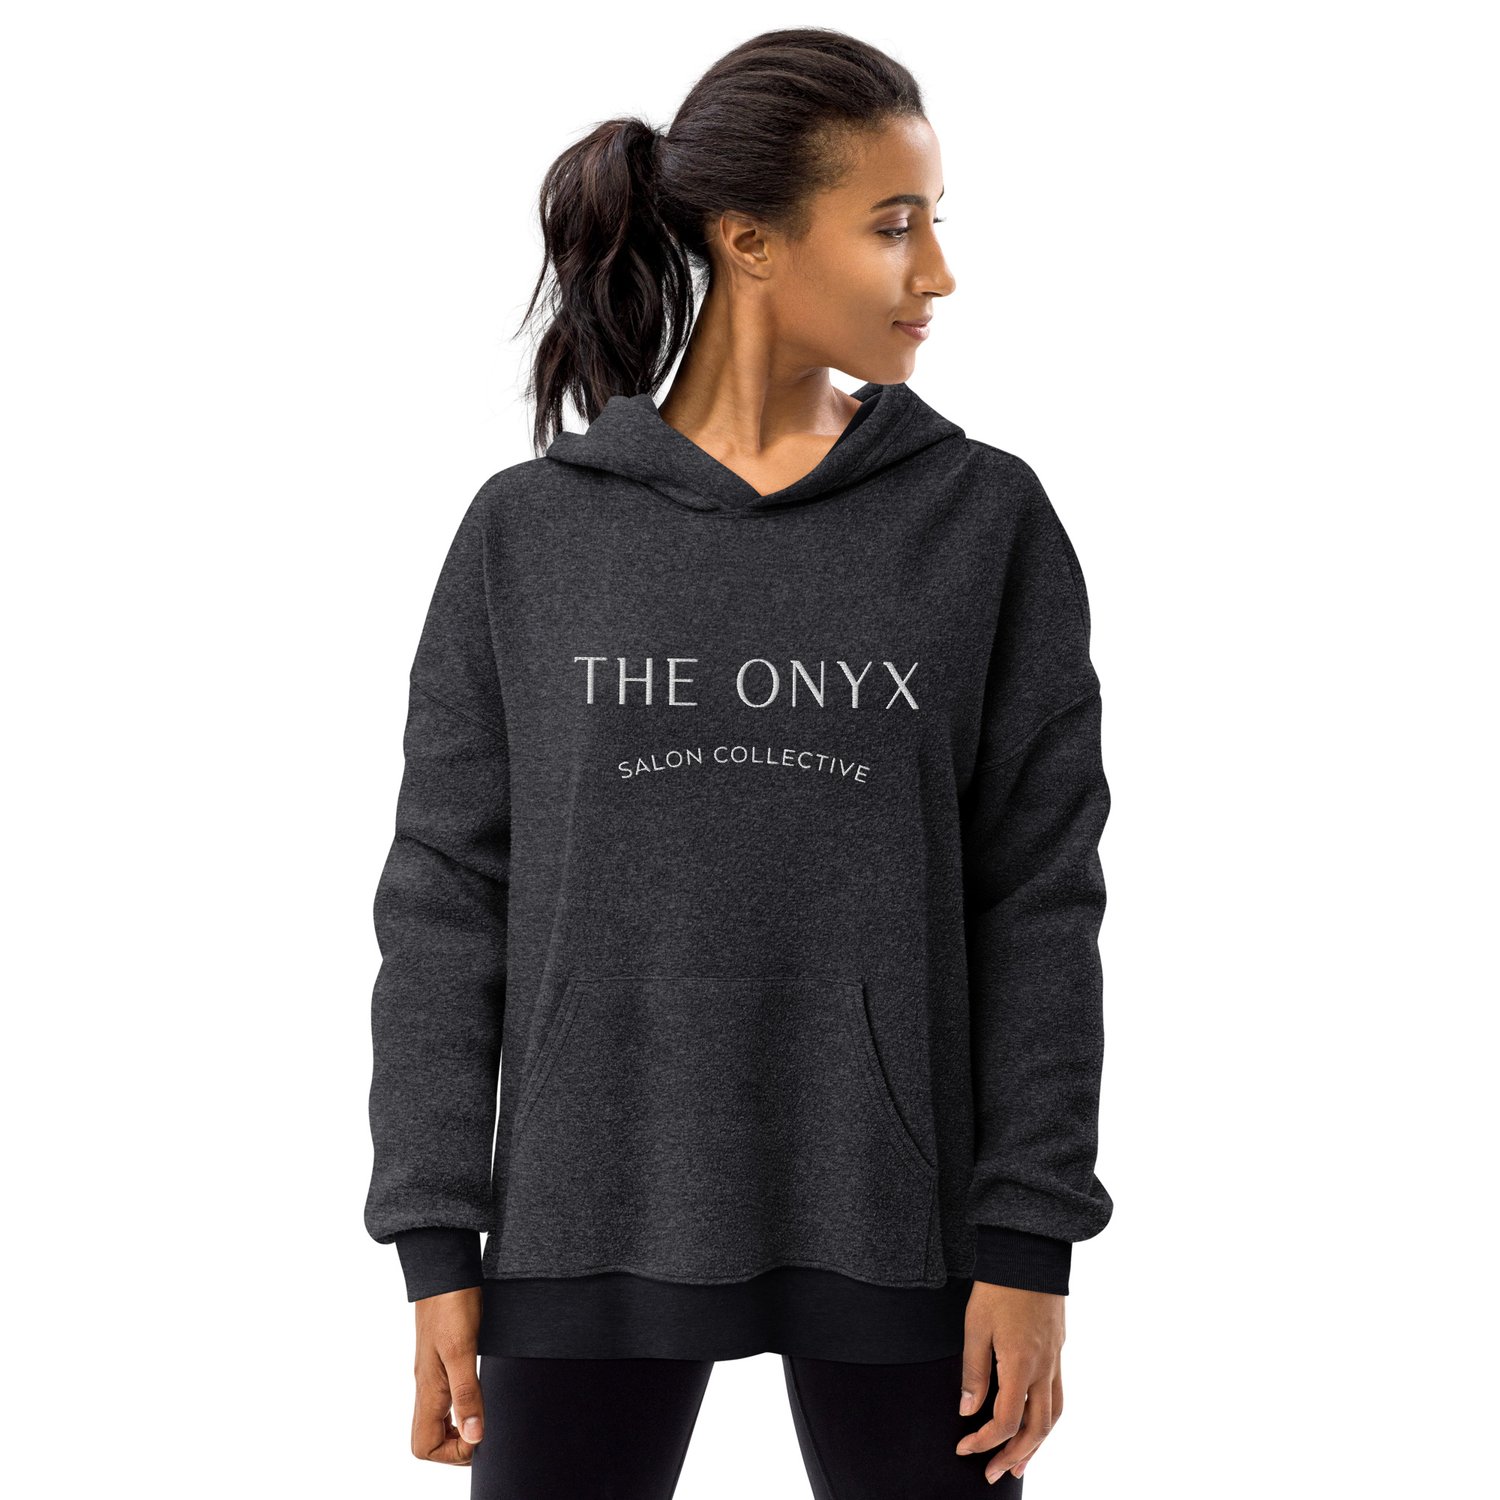 Unisex sueded fleece hoodie — The Onyx Salon Collective